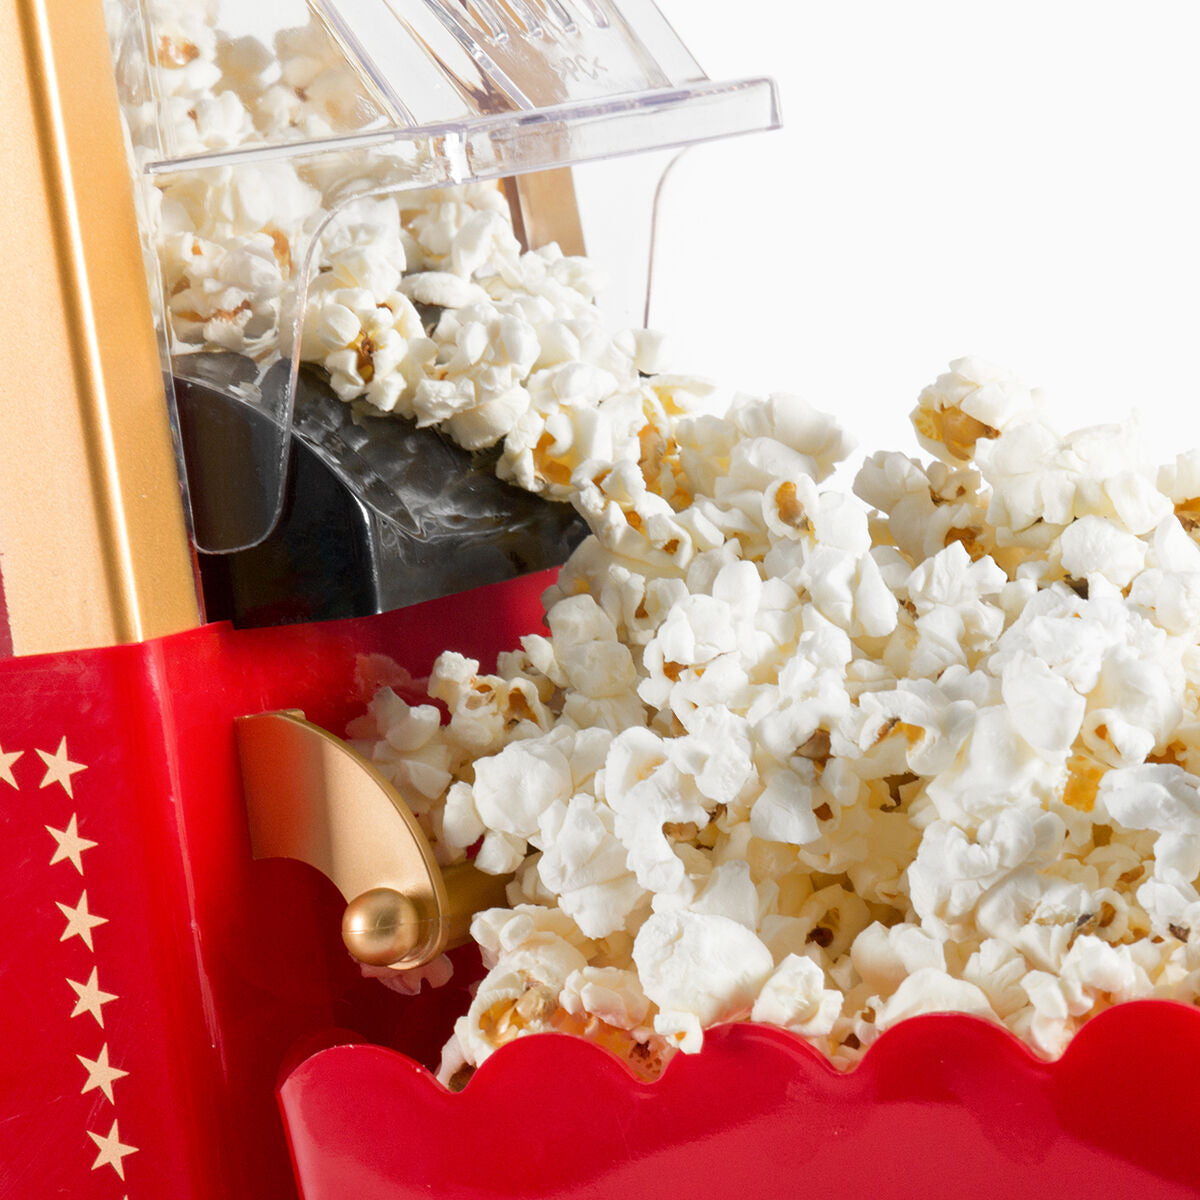 InnovaGoods Popcorn Maker Sweet & Pop Times 1200W Red